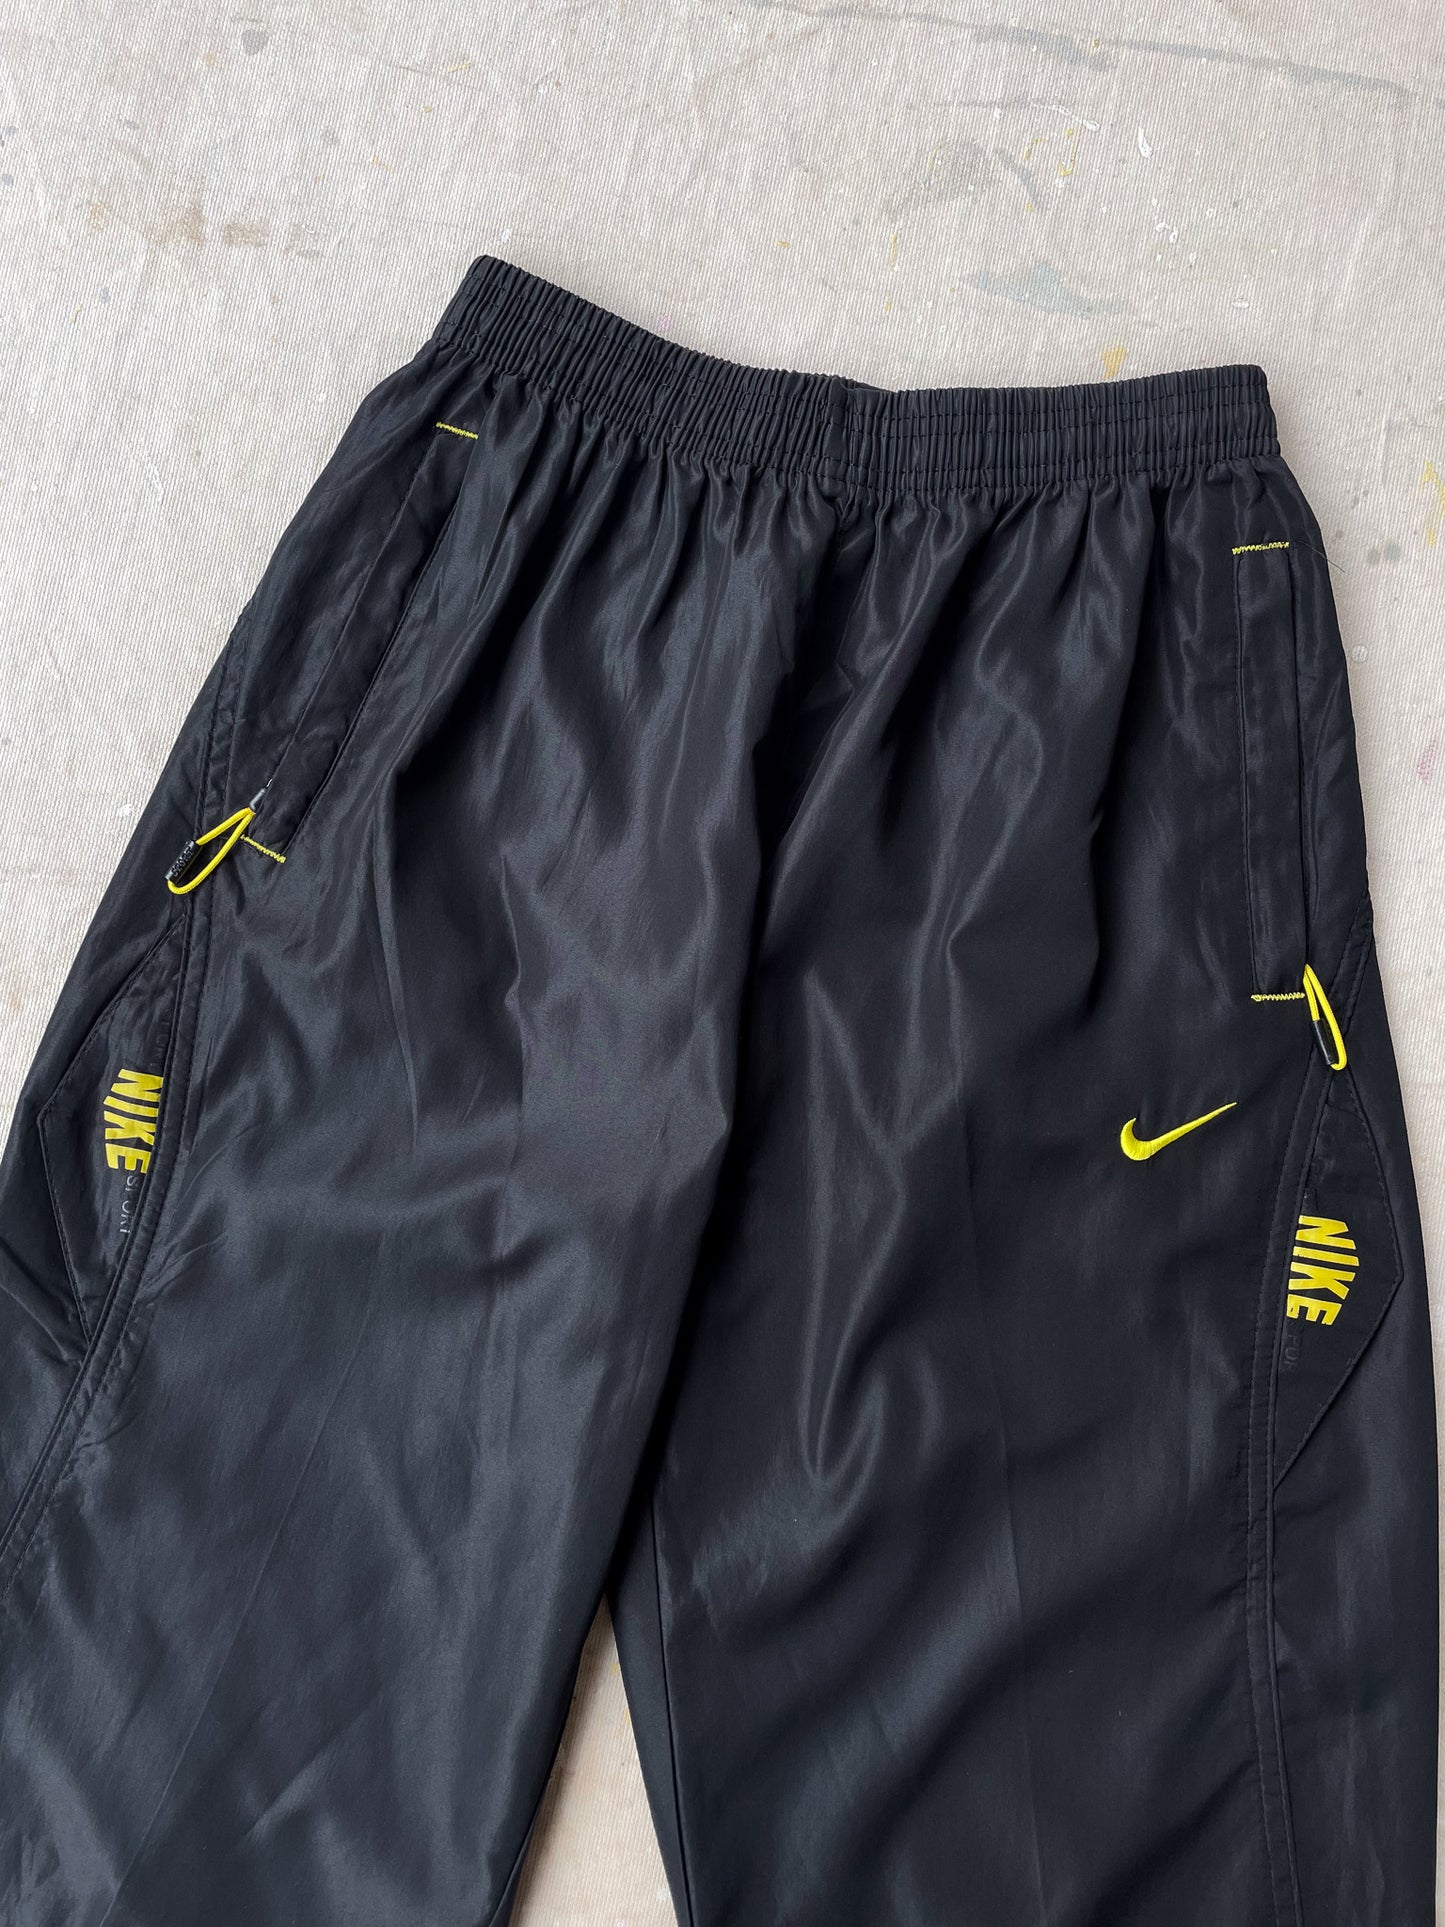 Bootleg Nike Shorts—[S]